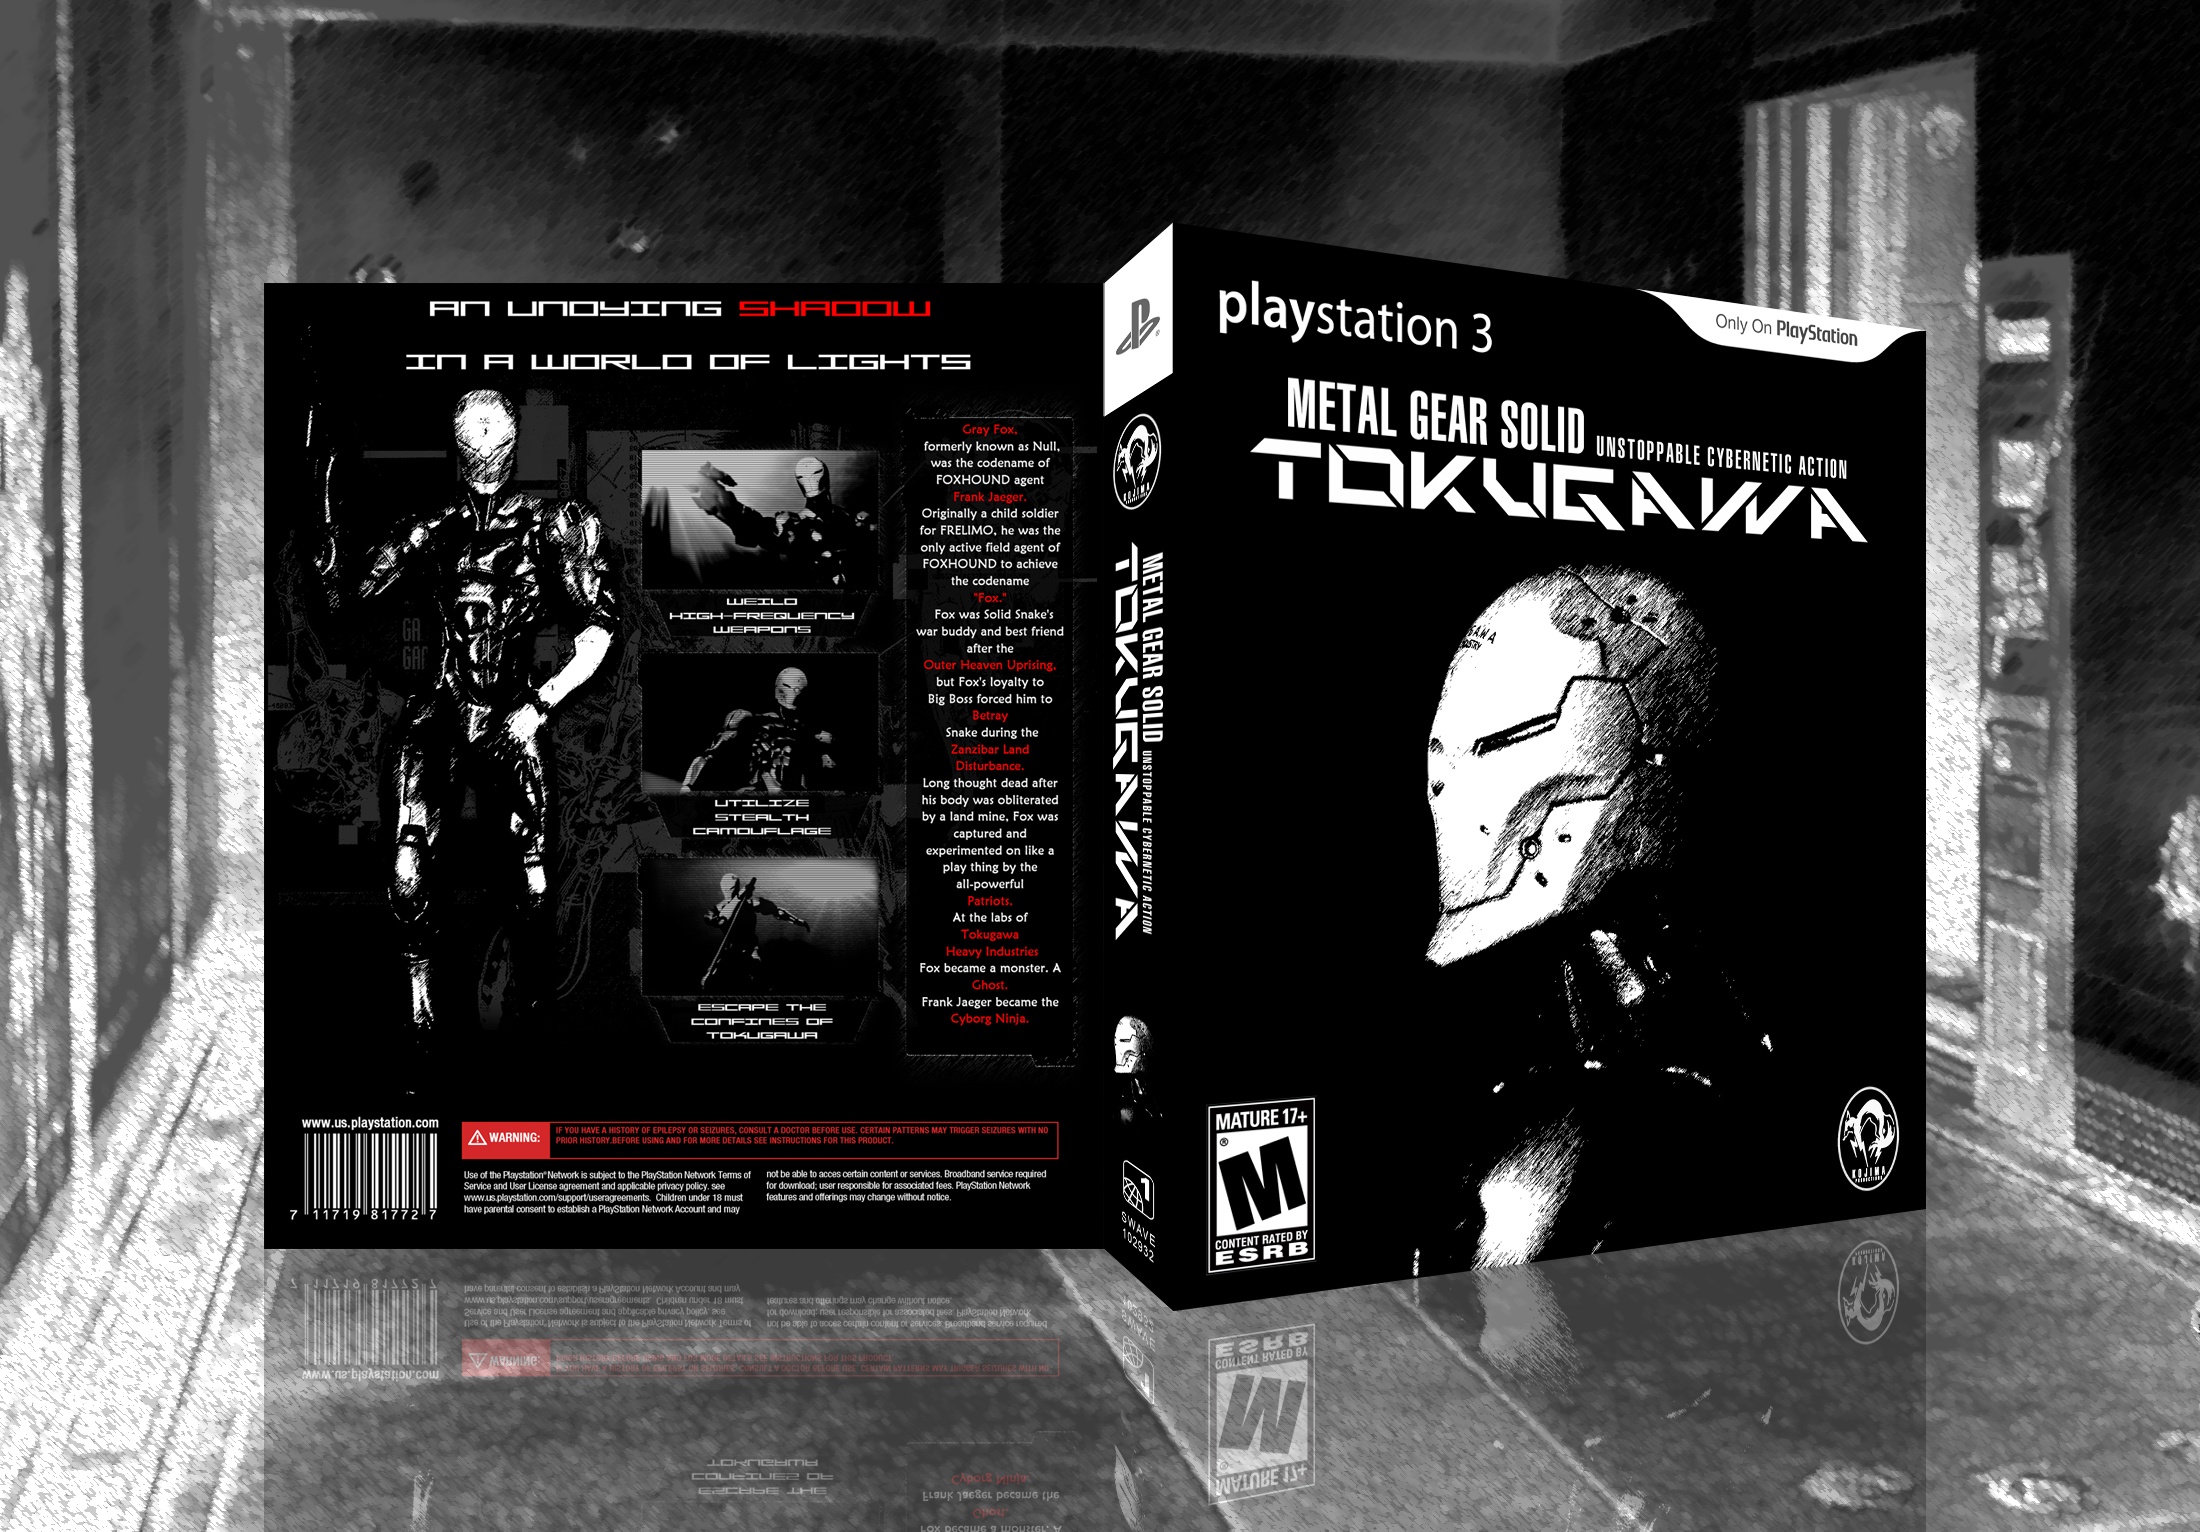 Metal Gear Solid: Tokugawa box cover